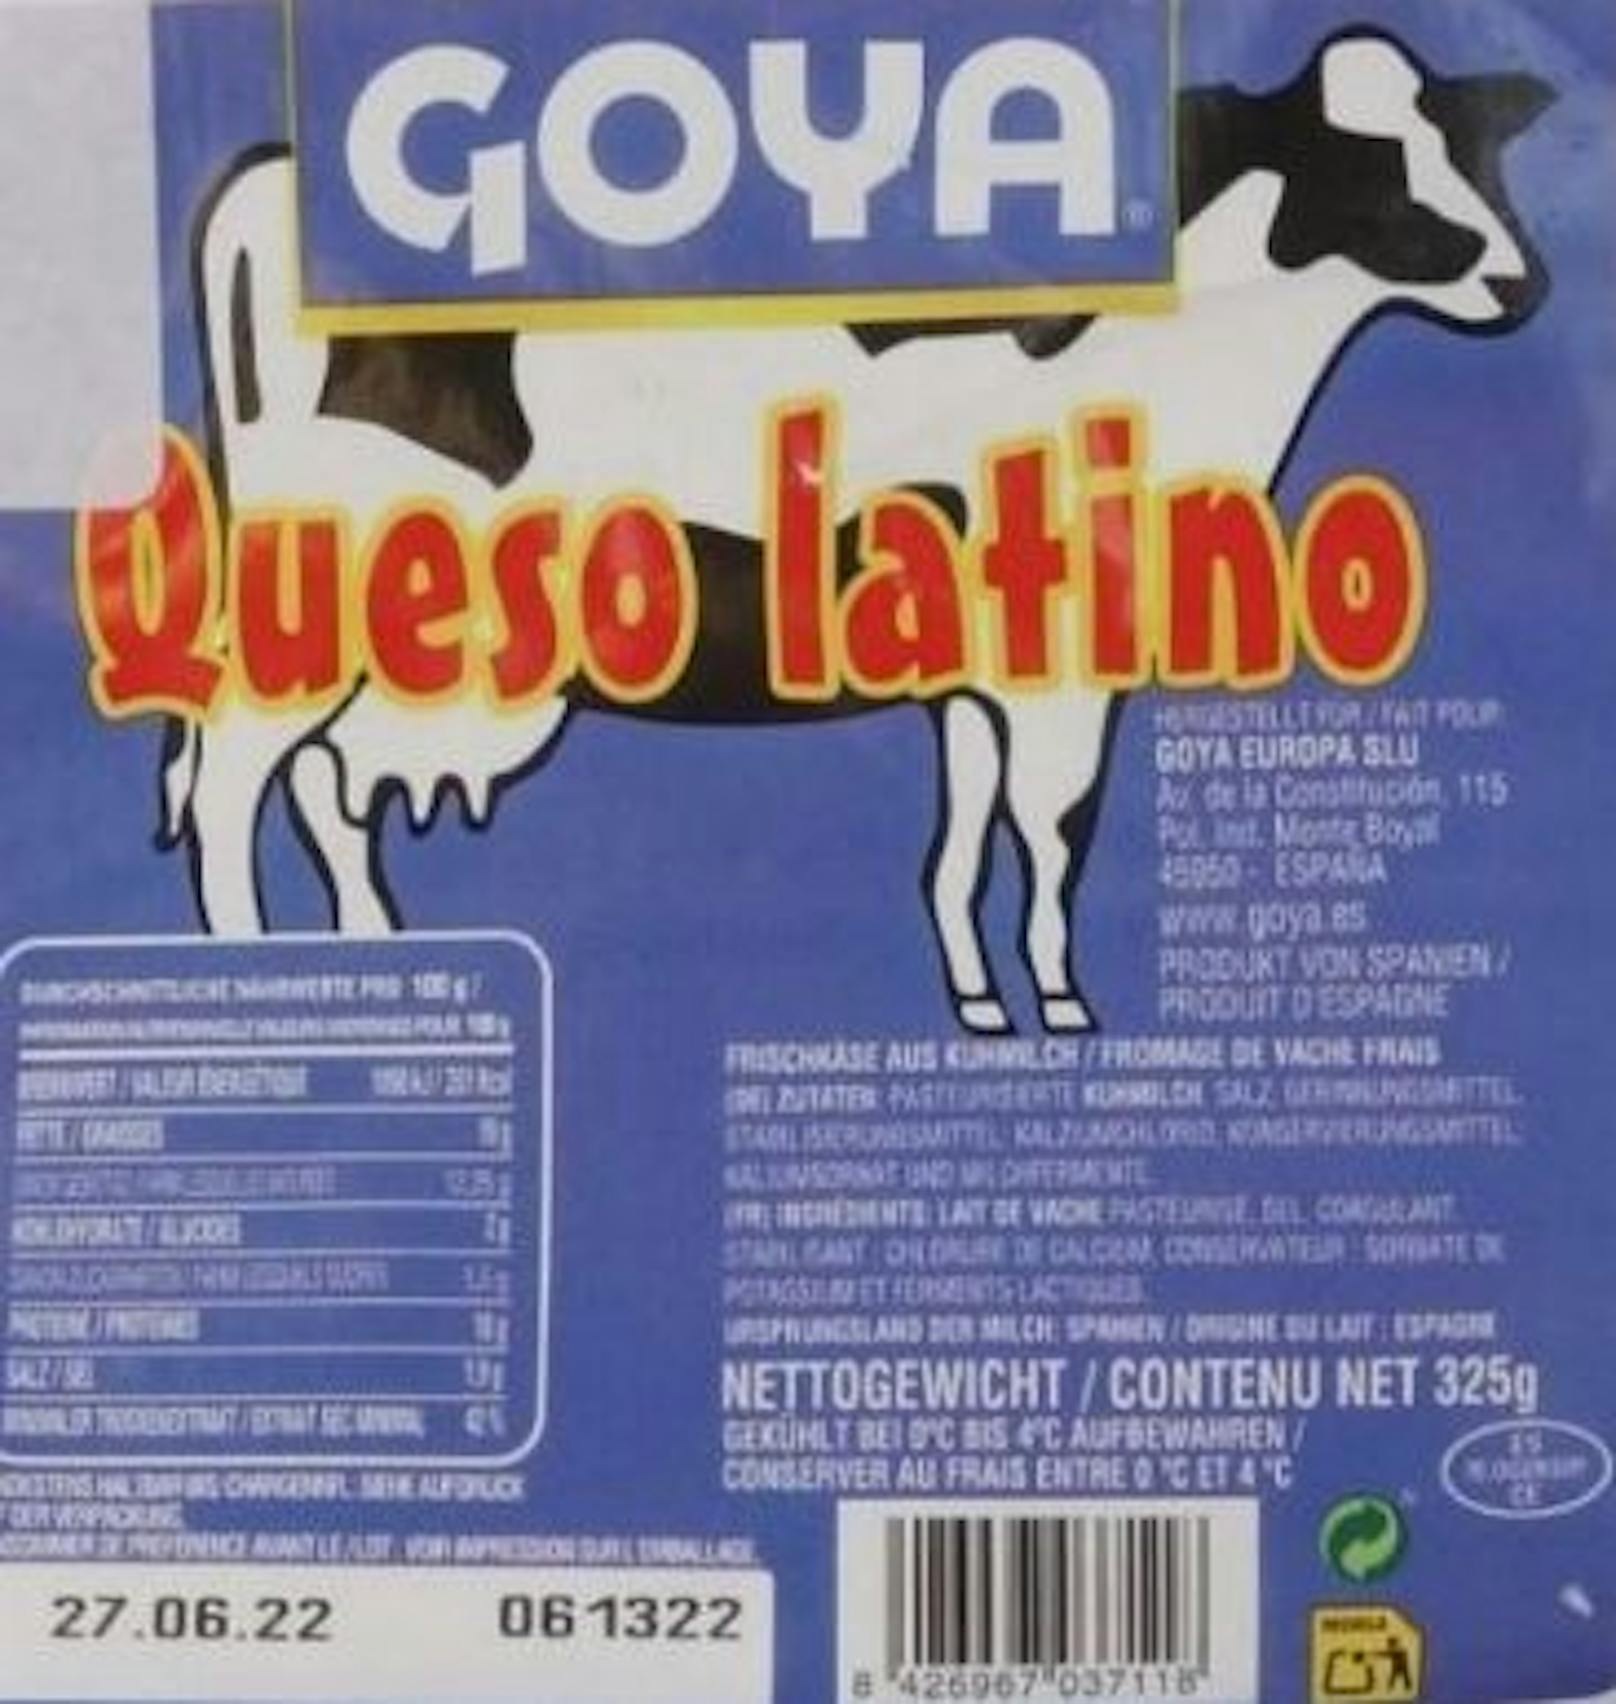 "Goya Queso latino"